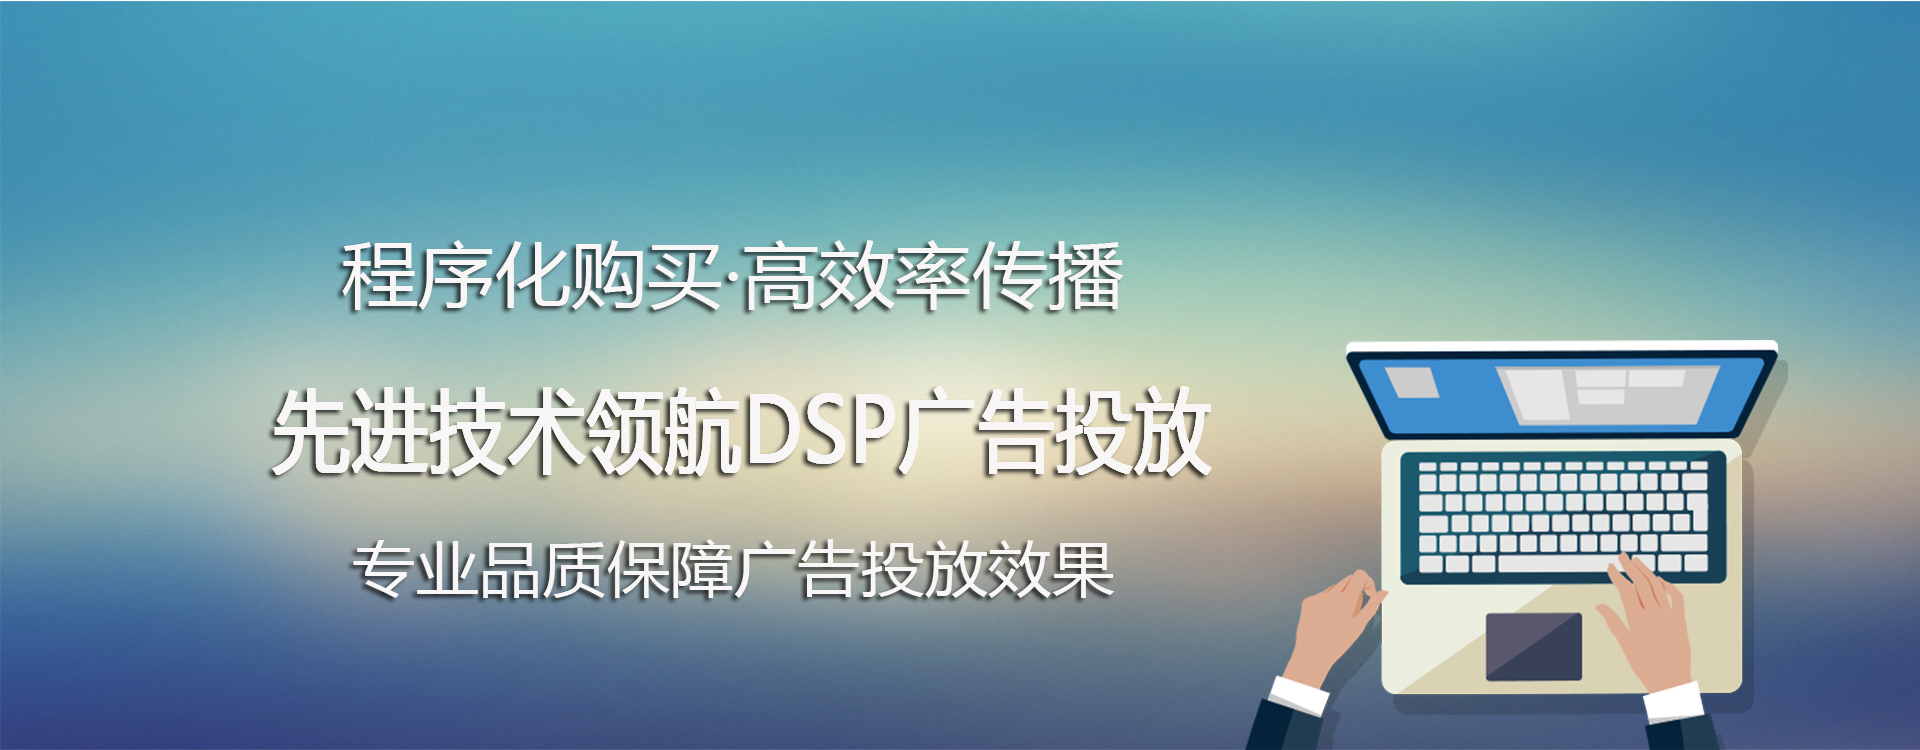 DSP營銷